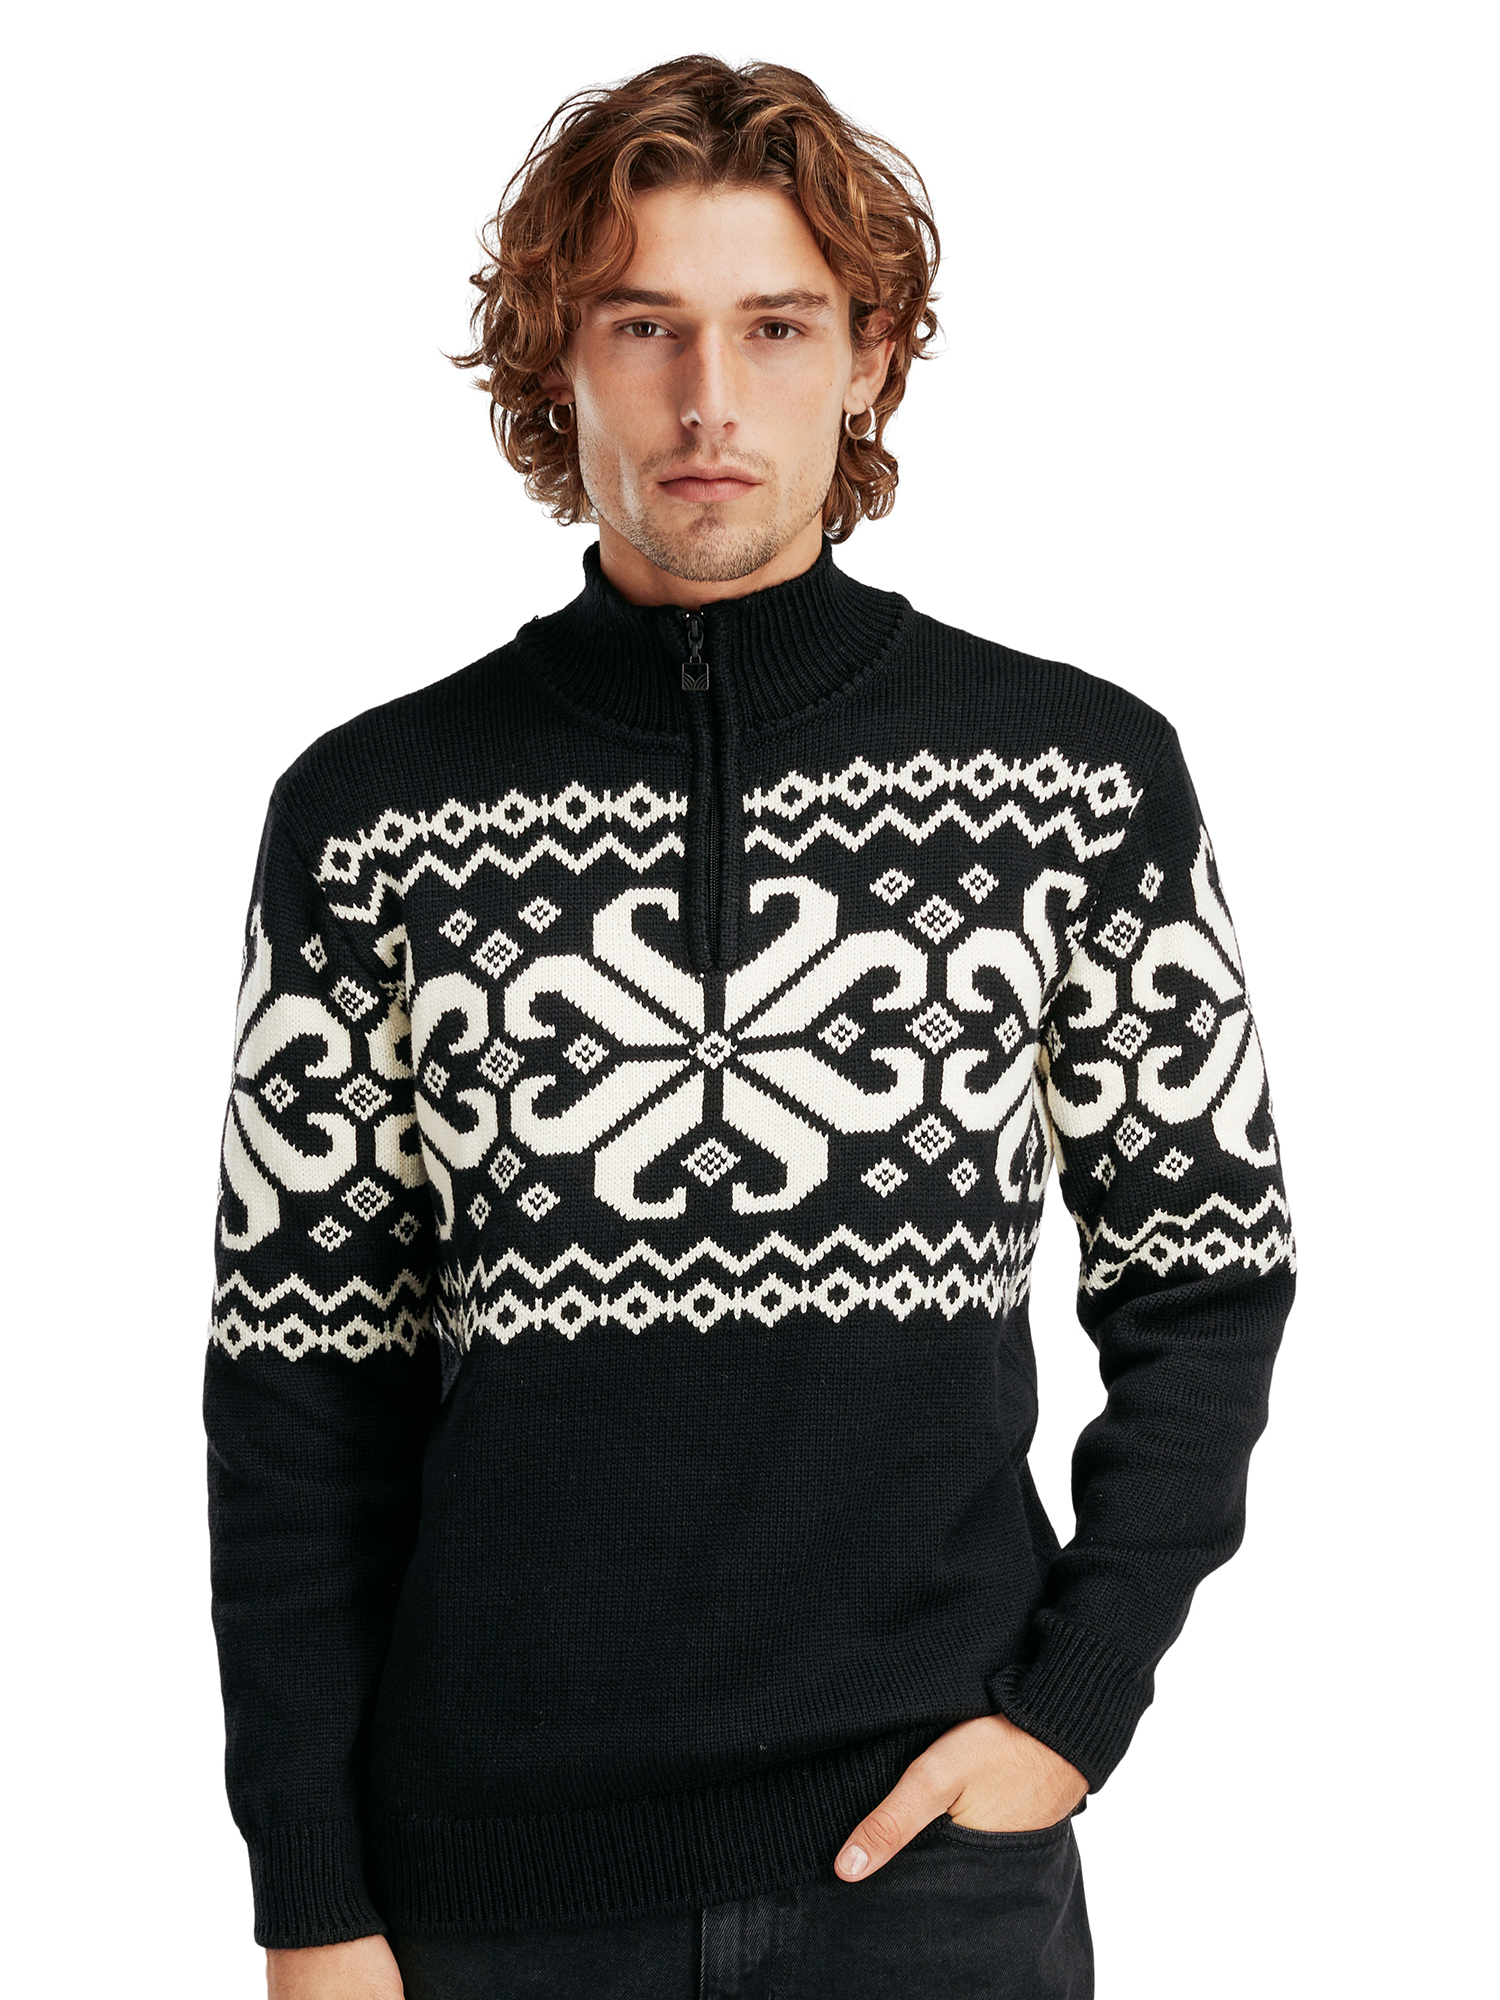 Falkeberg Masc Sweater Black Offwhite - Dale of Norway